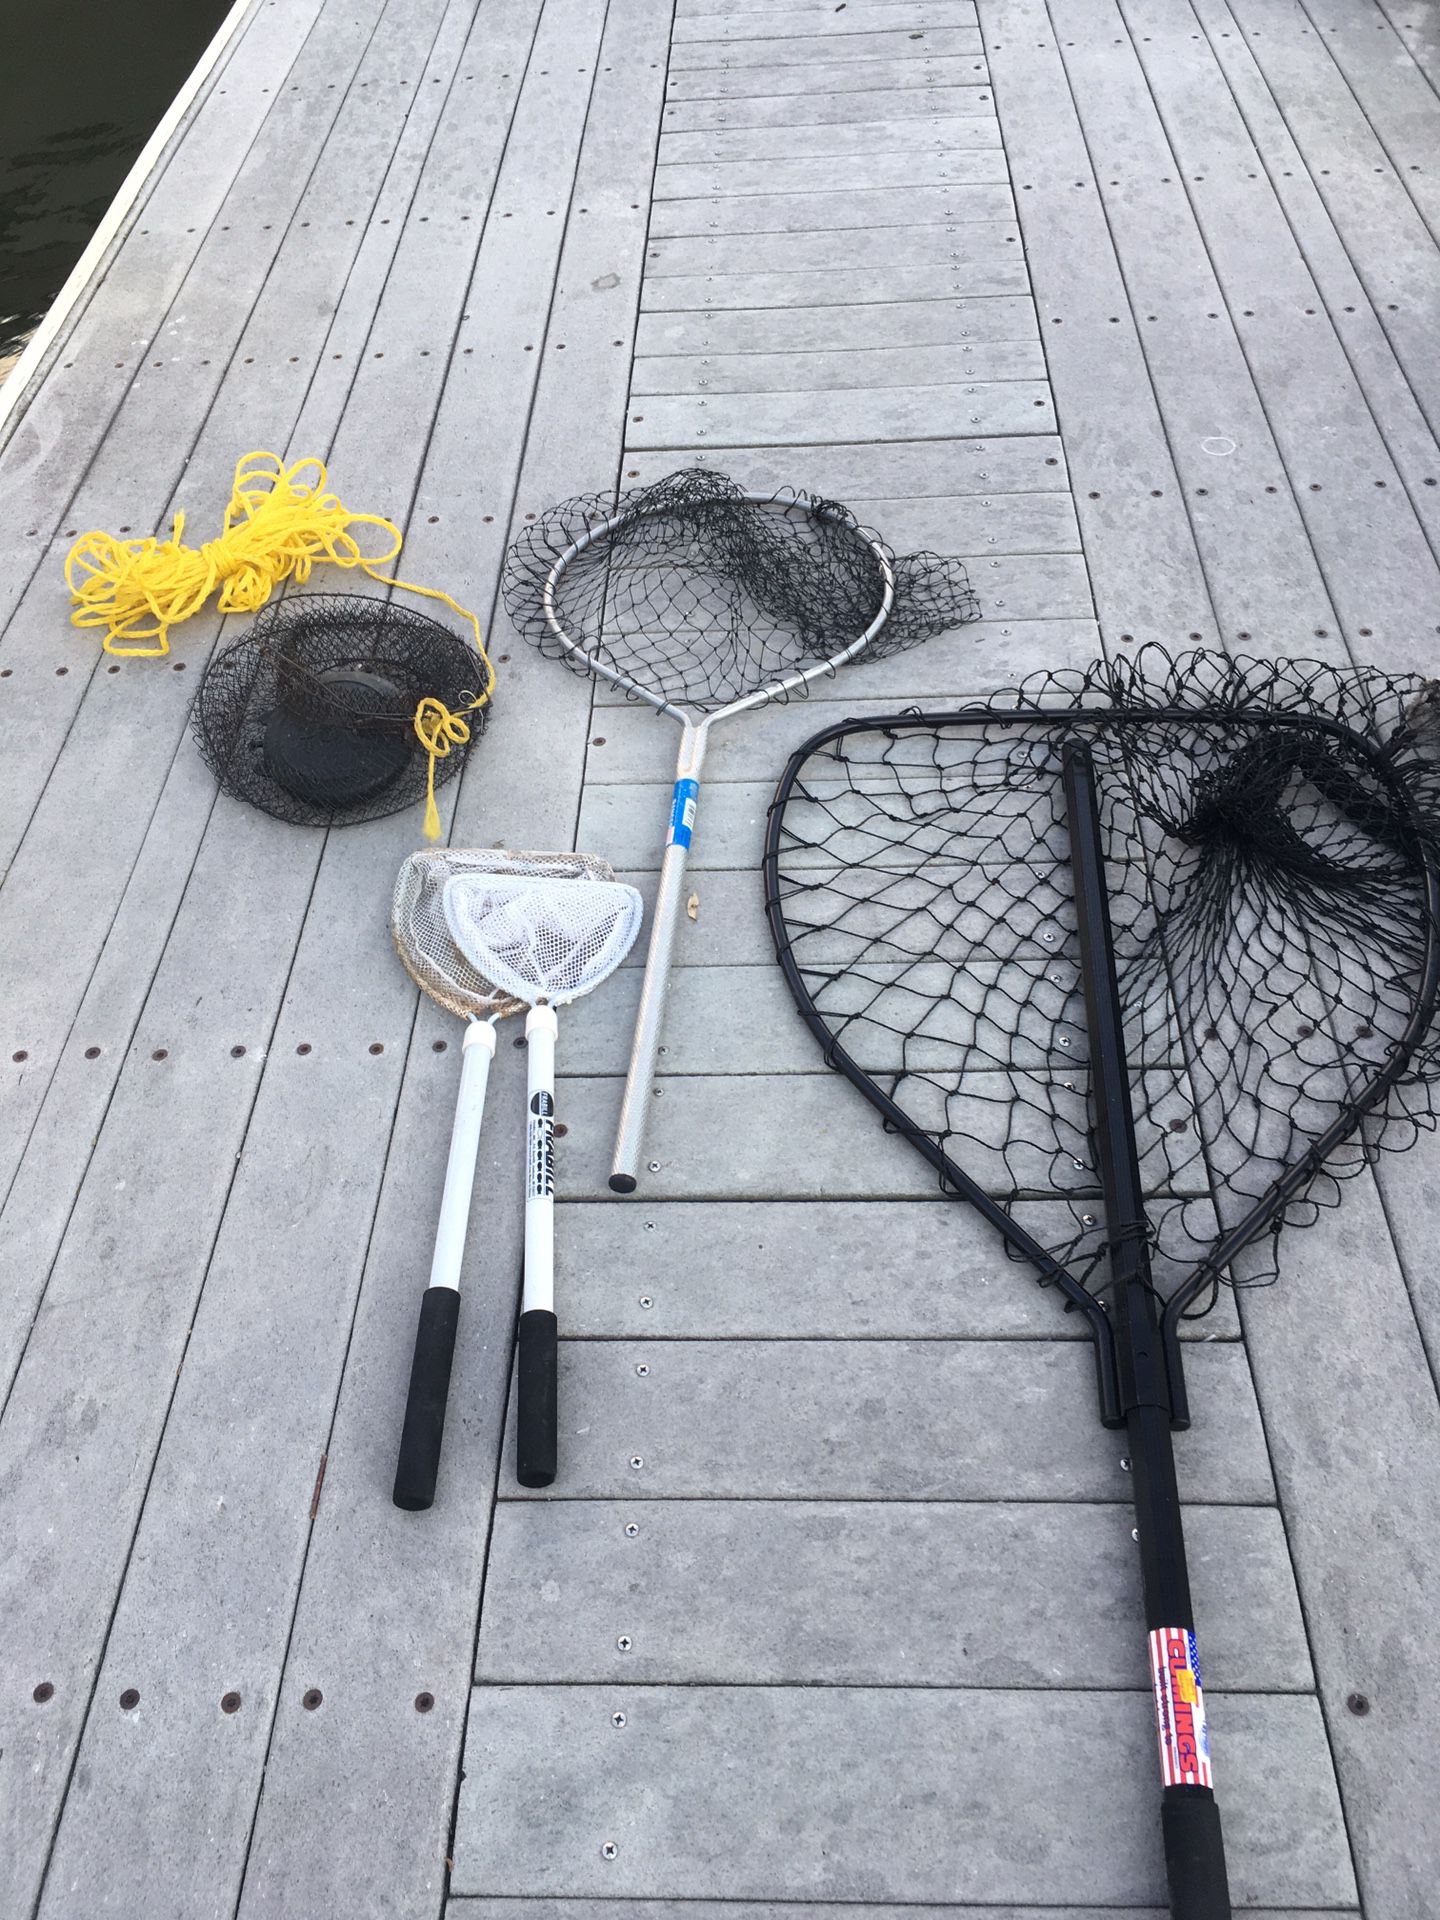 Fishing Net Set